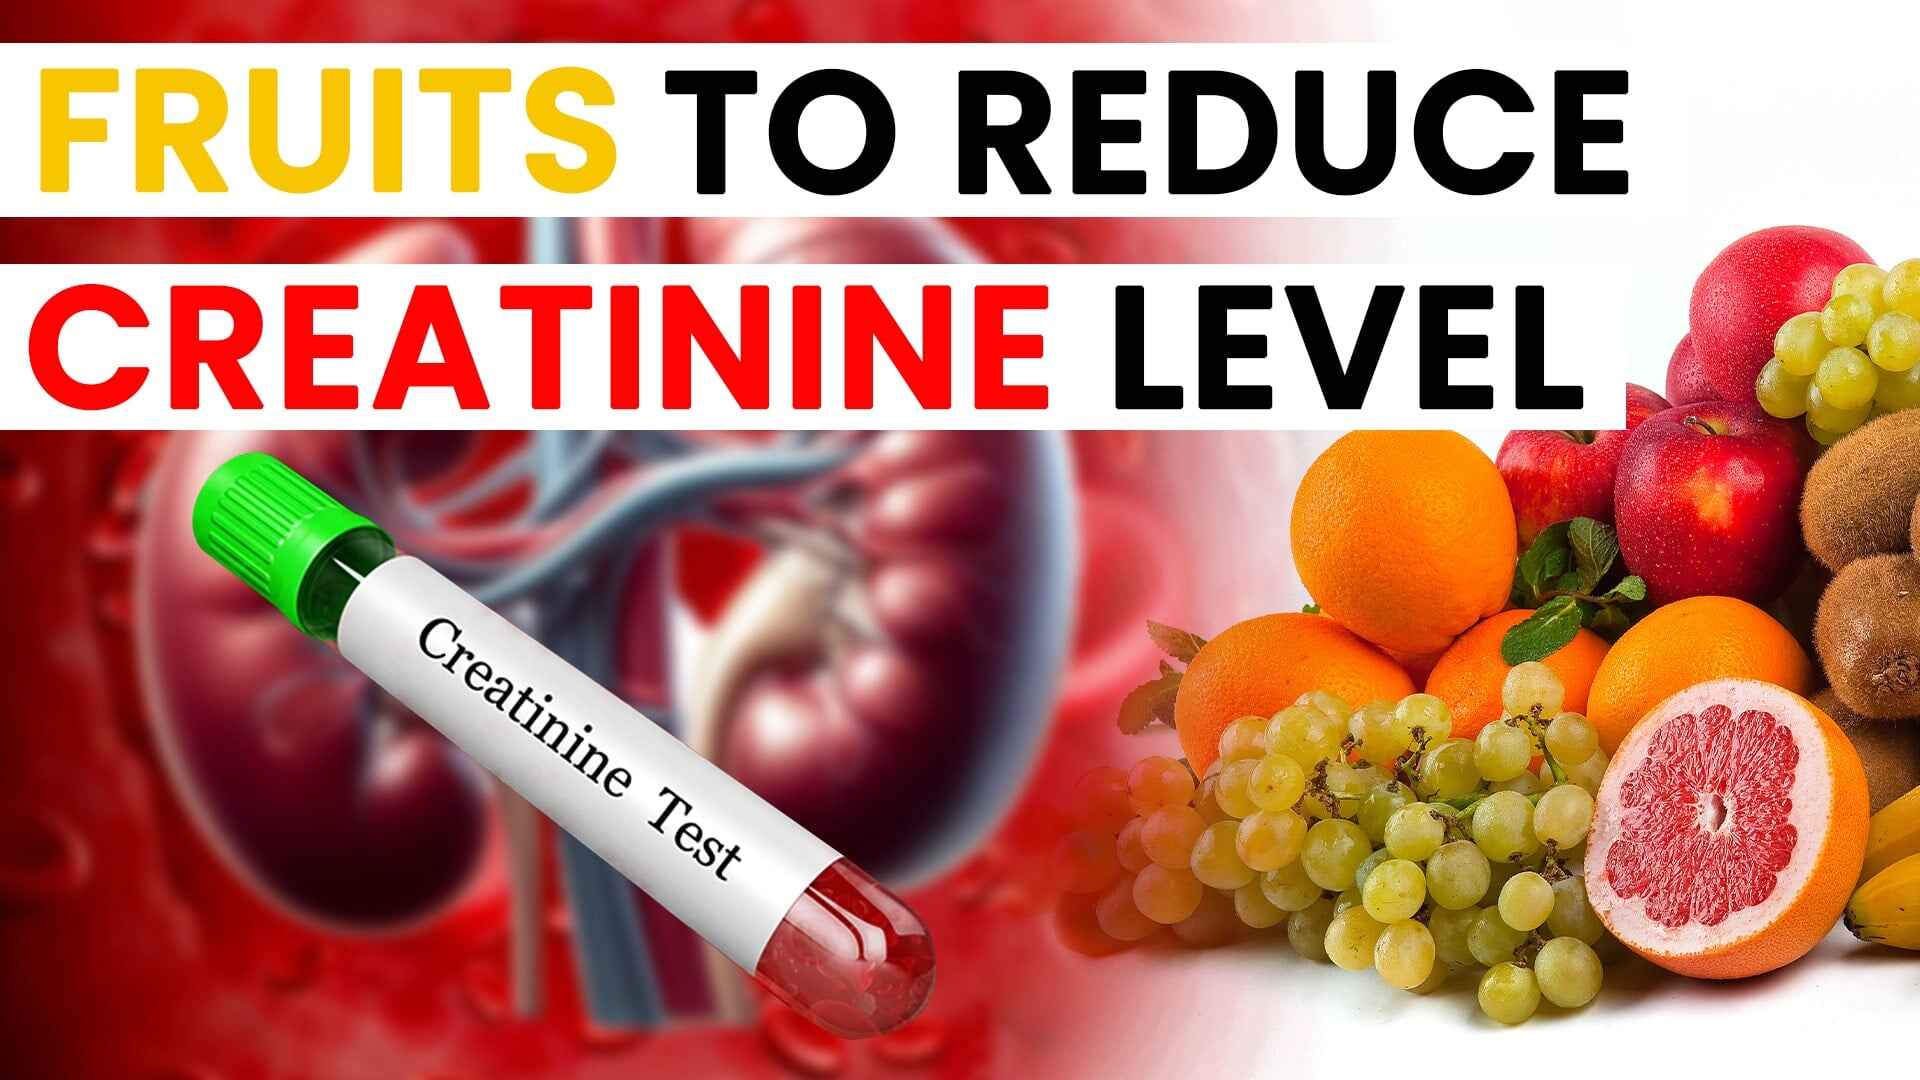 List of Fruits To Reduce Creatinine Level